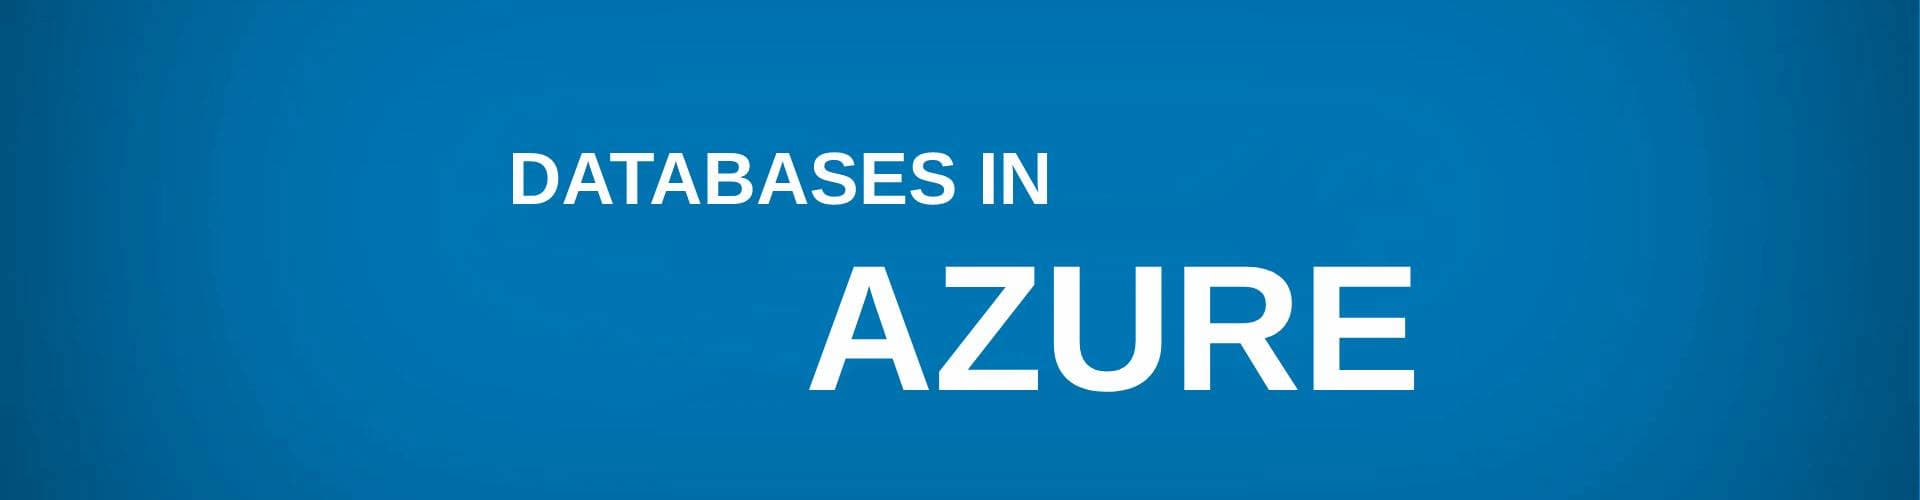 databases-in-azure